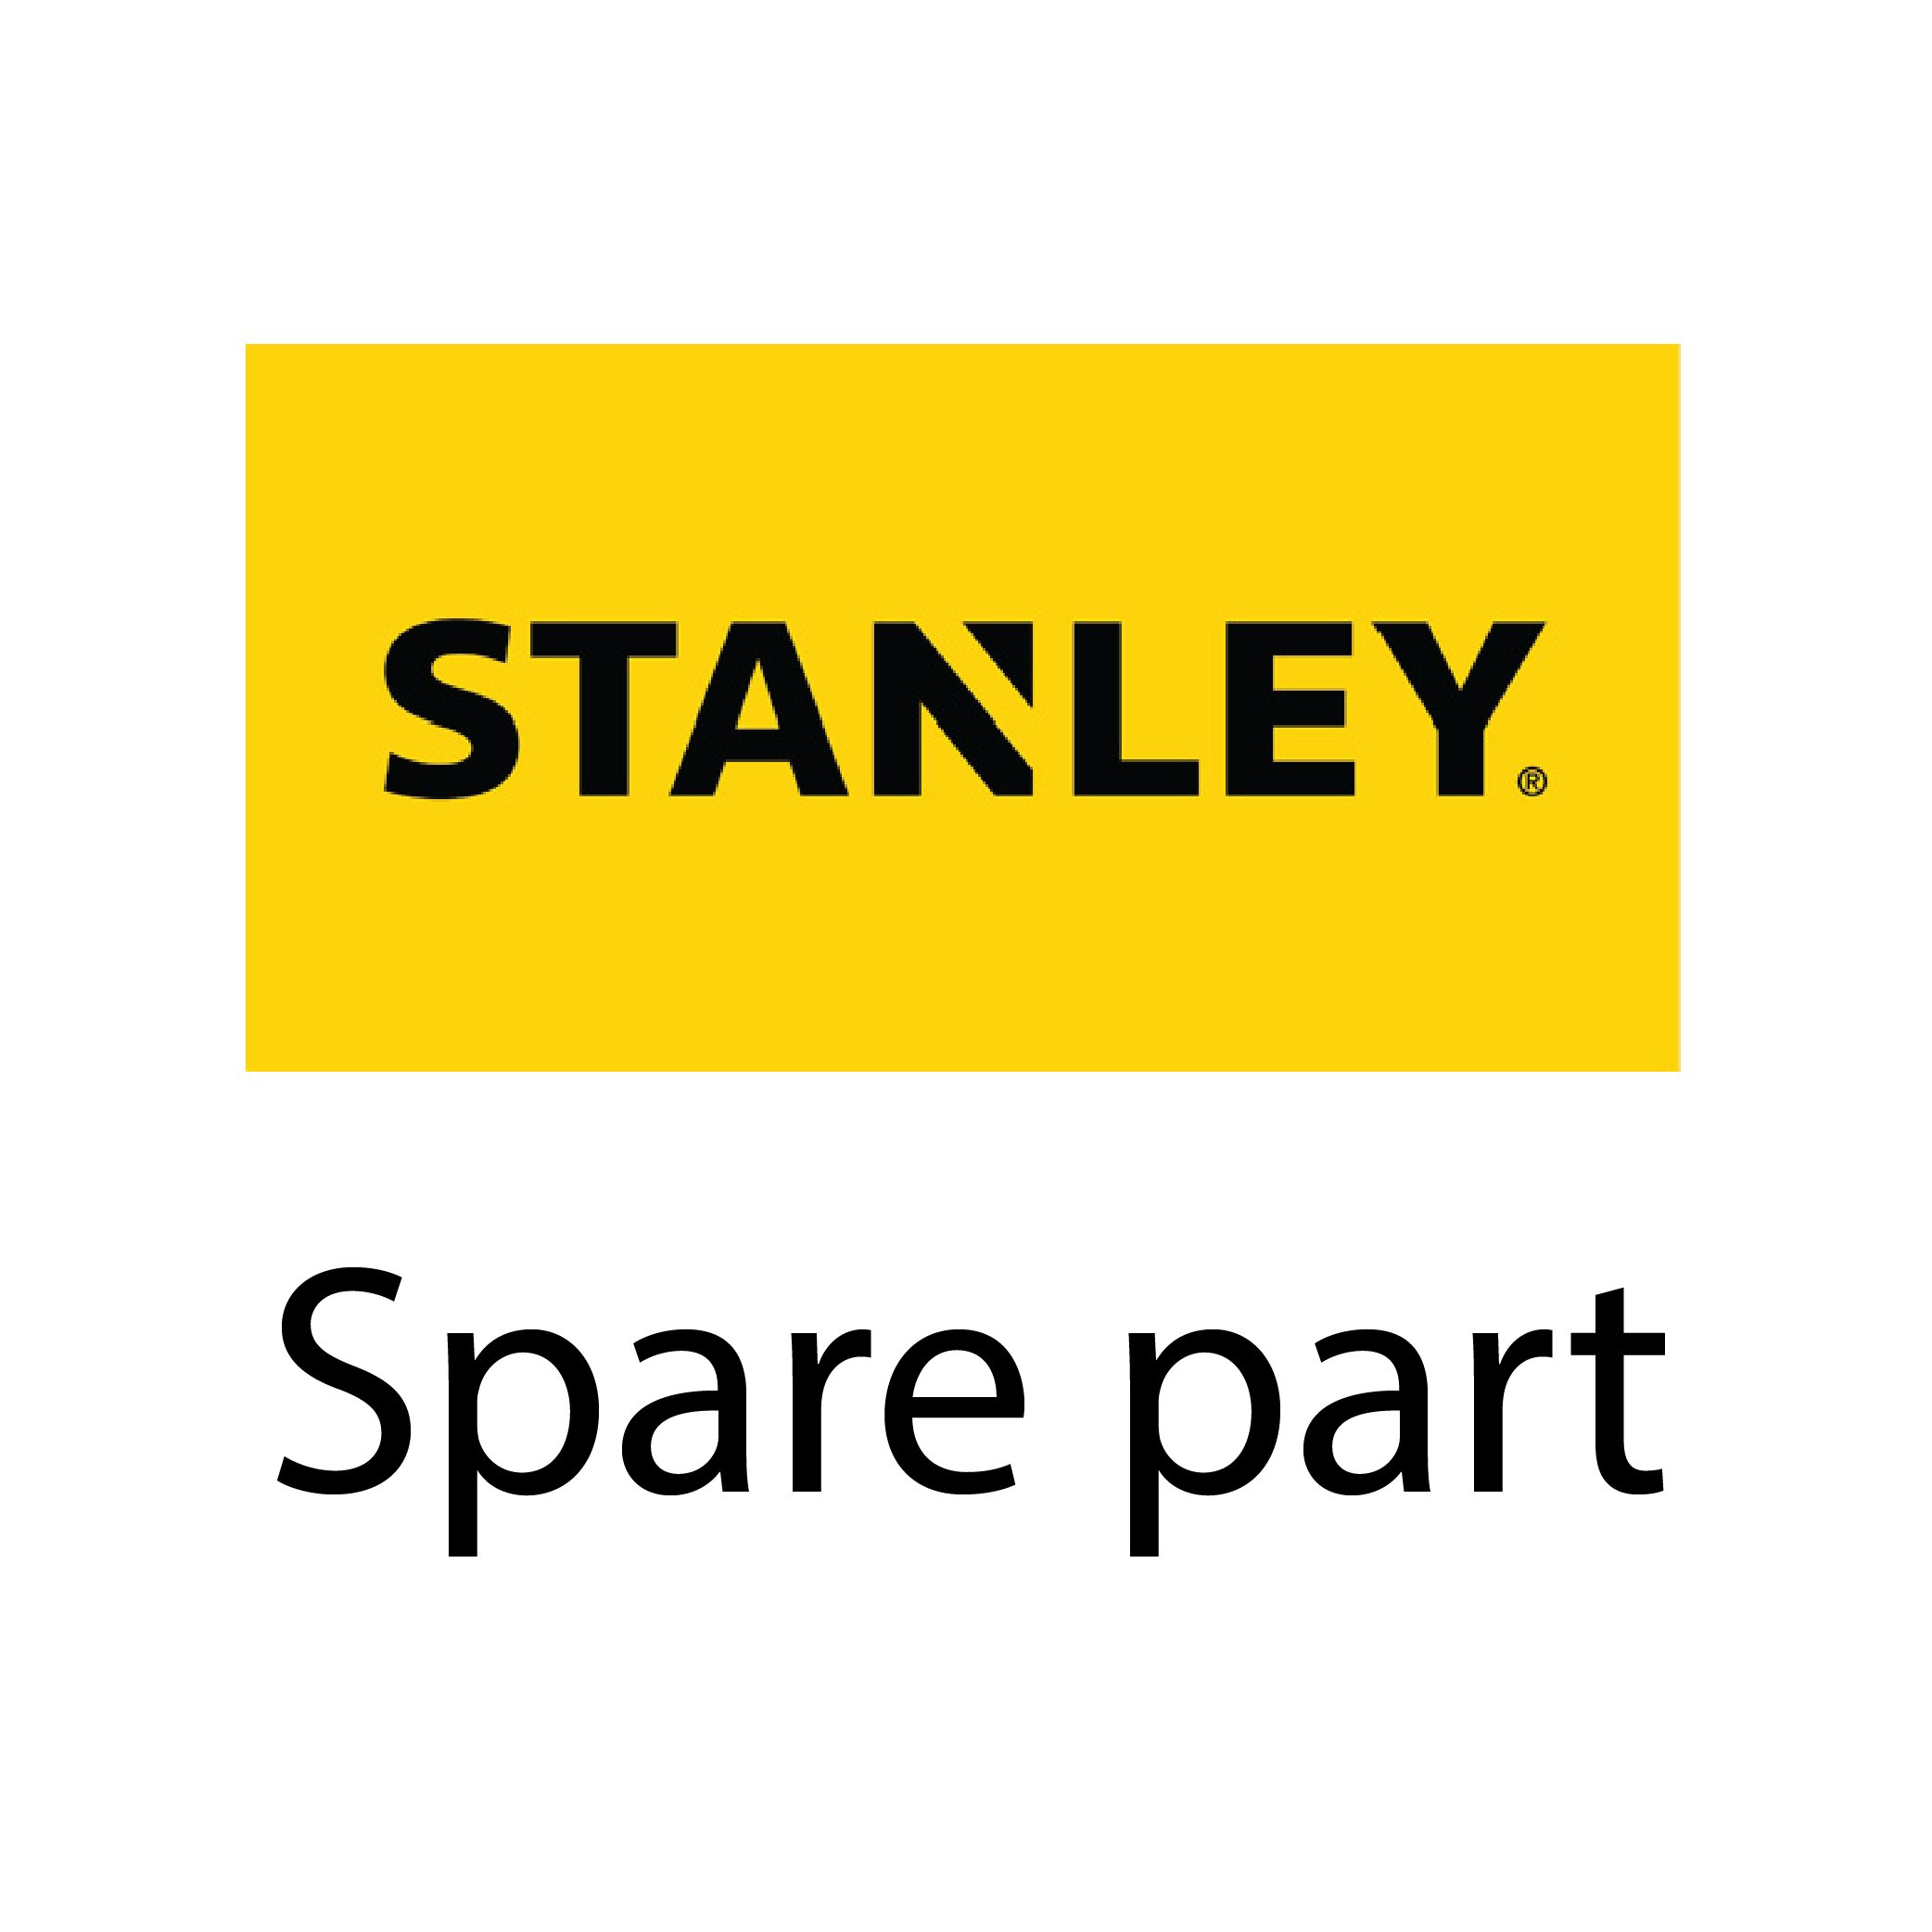 SKI - สกี จำหน่ายสินค้าหลากหลาย และคุณภาพดี | STANLEY #29-861 ปลอก(อะไหล่)ลูกกลิ้ง 7นิ้ว ขนสั้น [36อัน/กล่อง] (PBT)